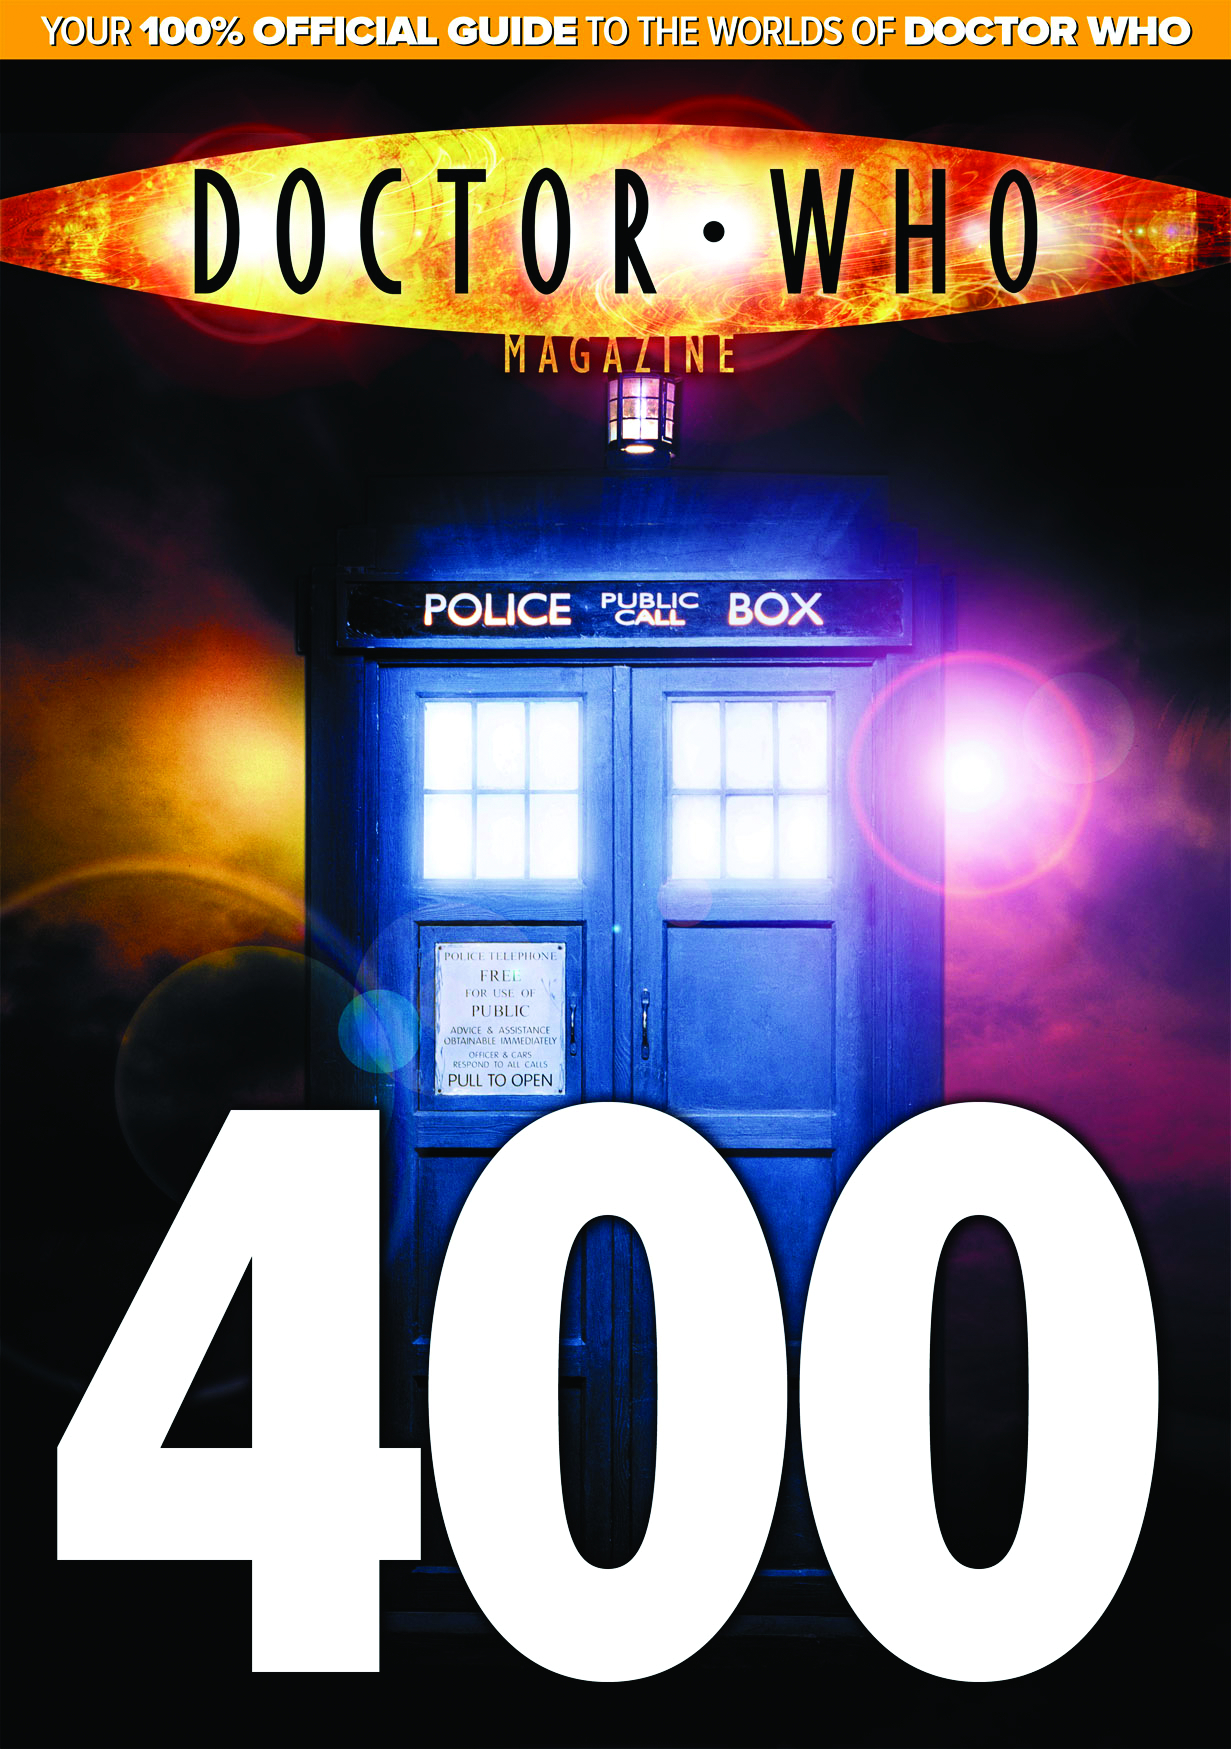 DOCTOR WHO MAGAZINE #400